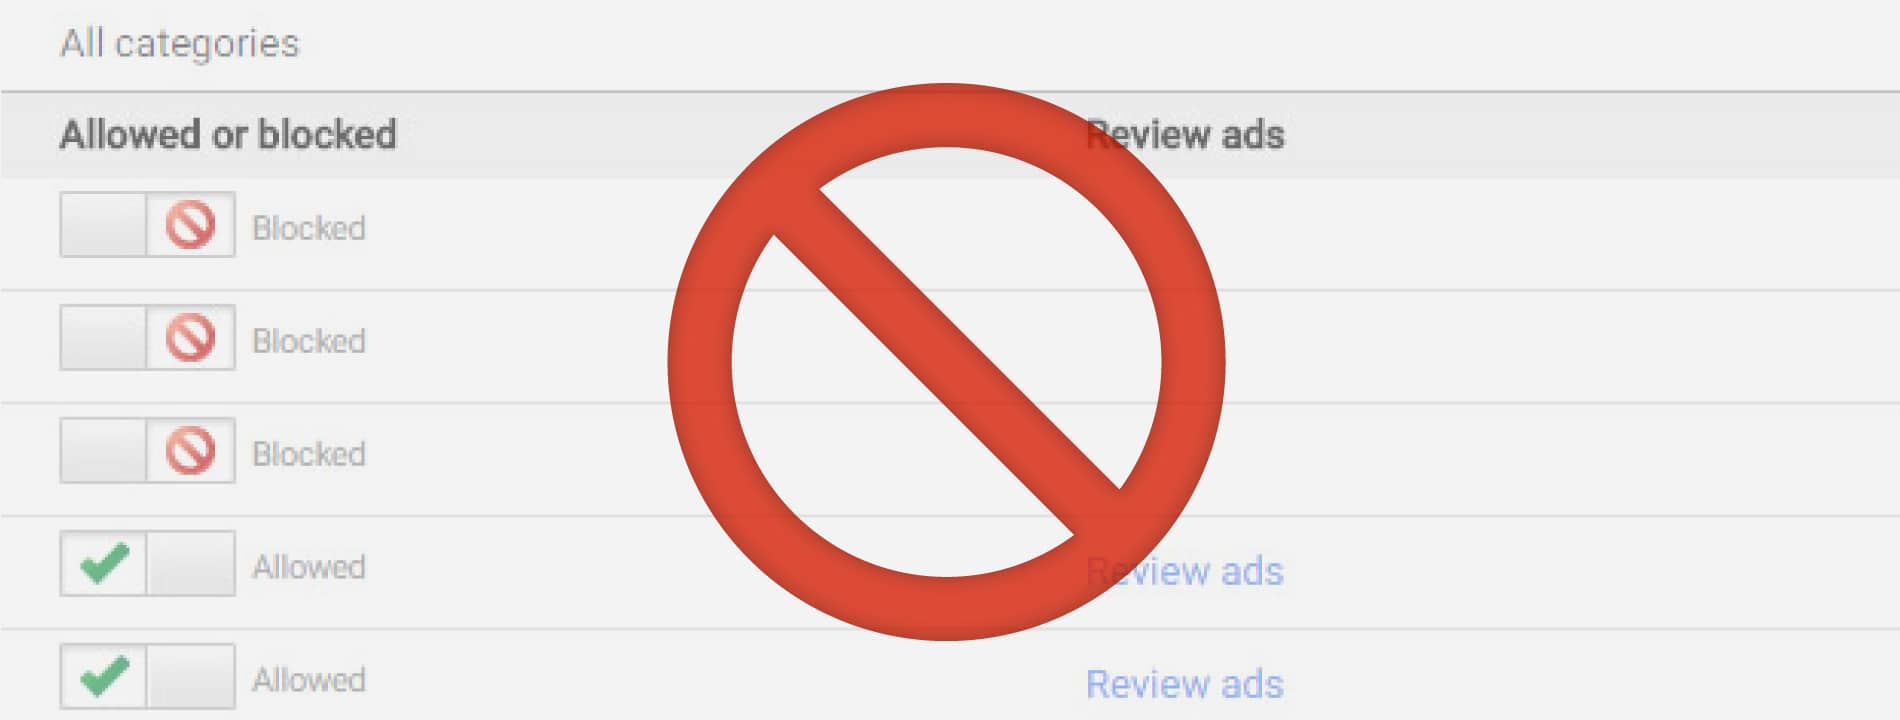 Google adds new AdSense blocking categories